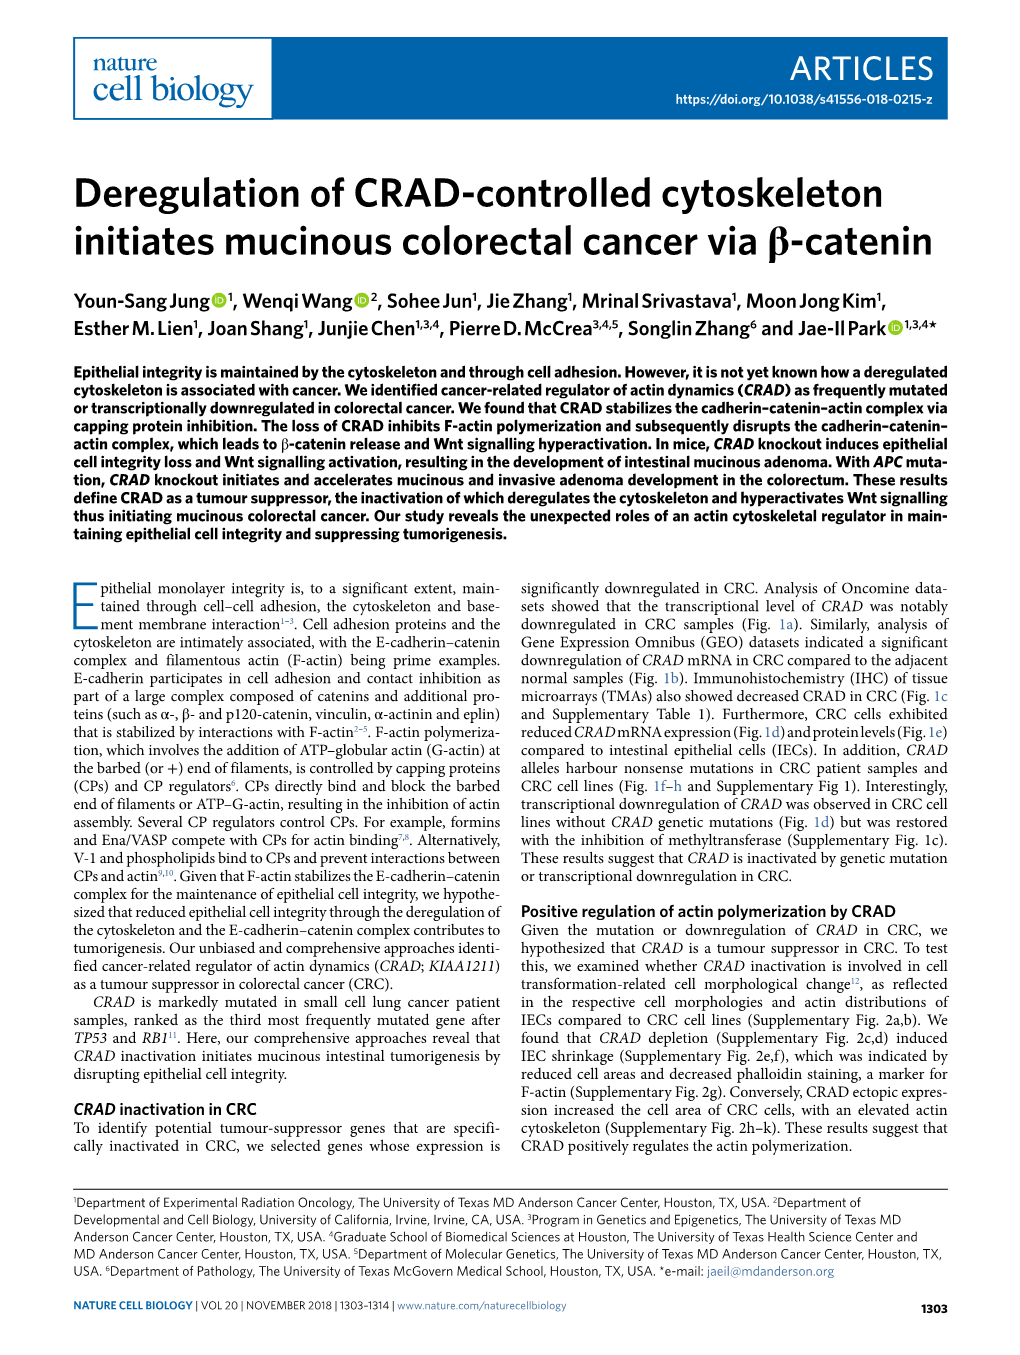 Jung, Y.S. Et Al. Deregulation of CRAD-Controlled Cytoskeleton Initiates Mucinous Colorectal Cancer Via Β-Catenin